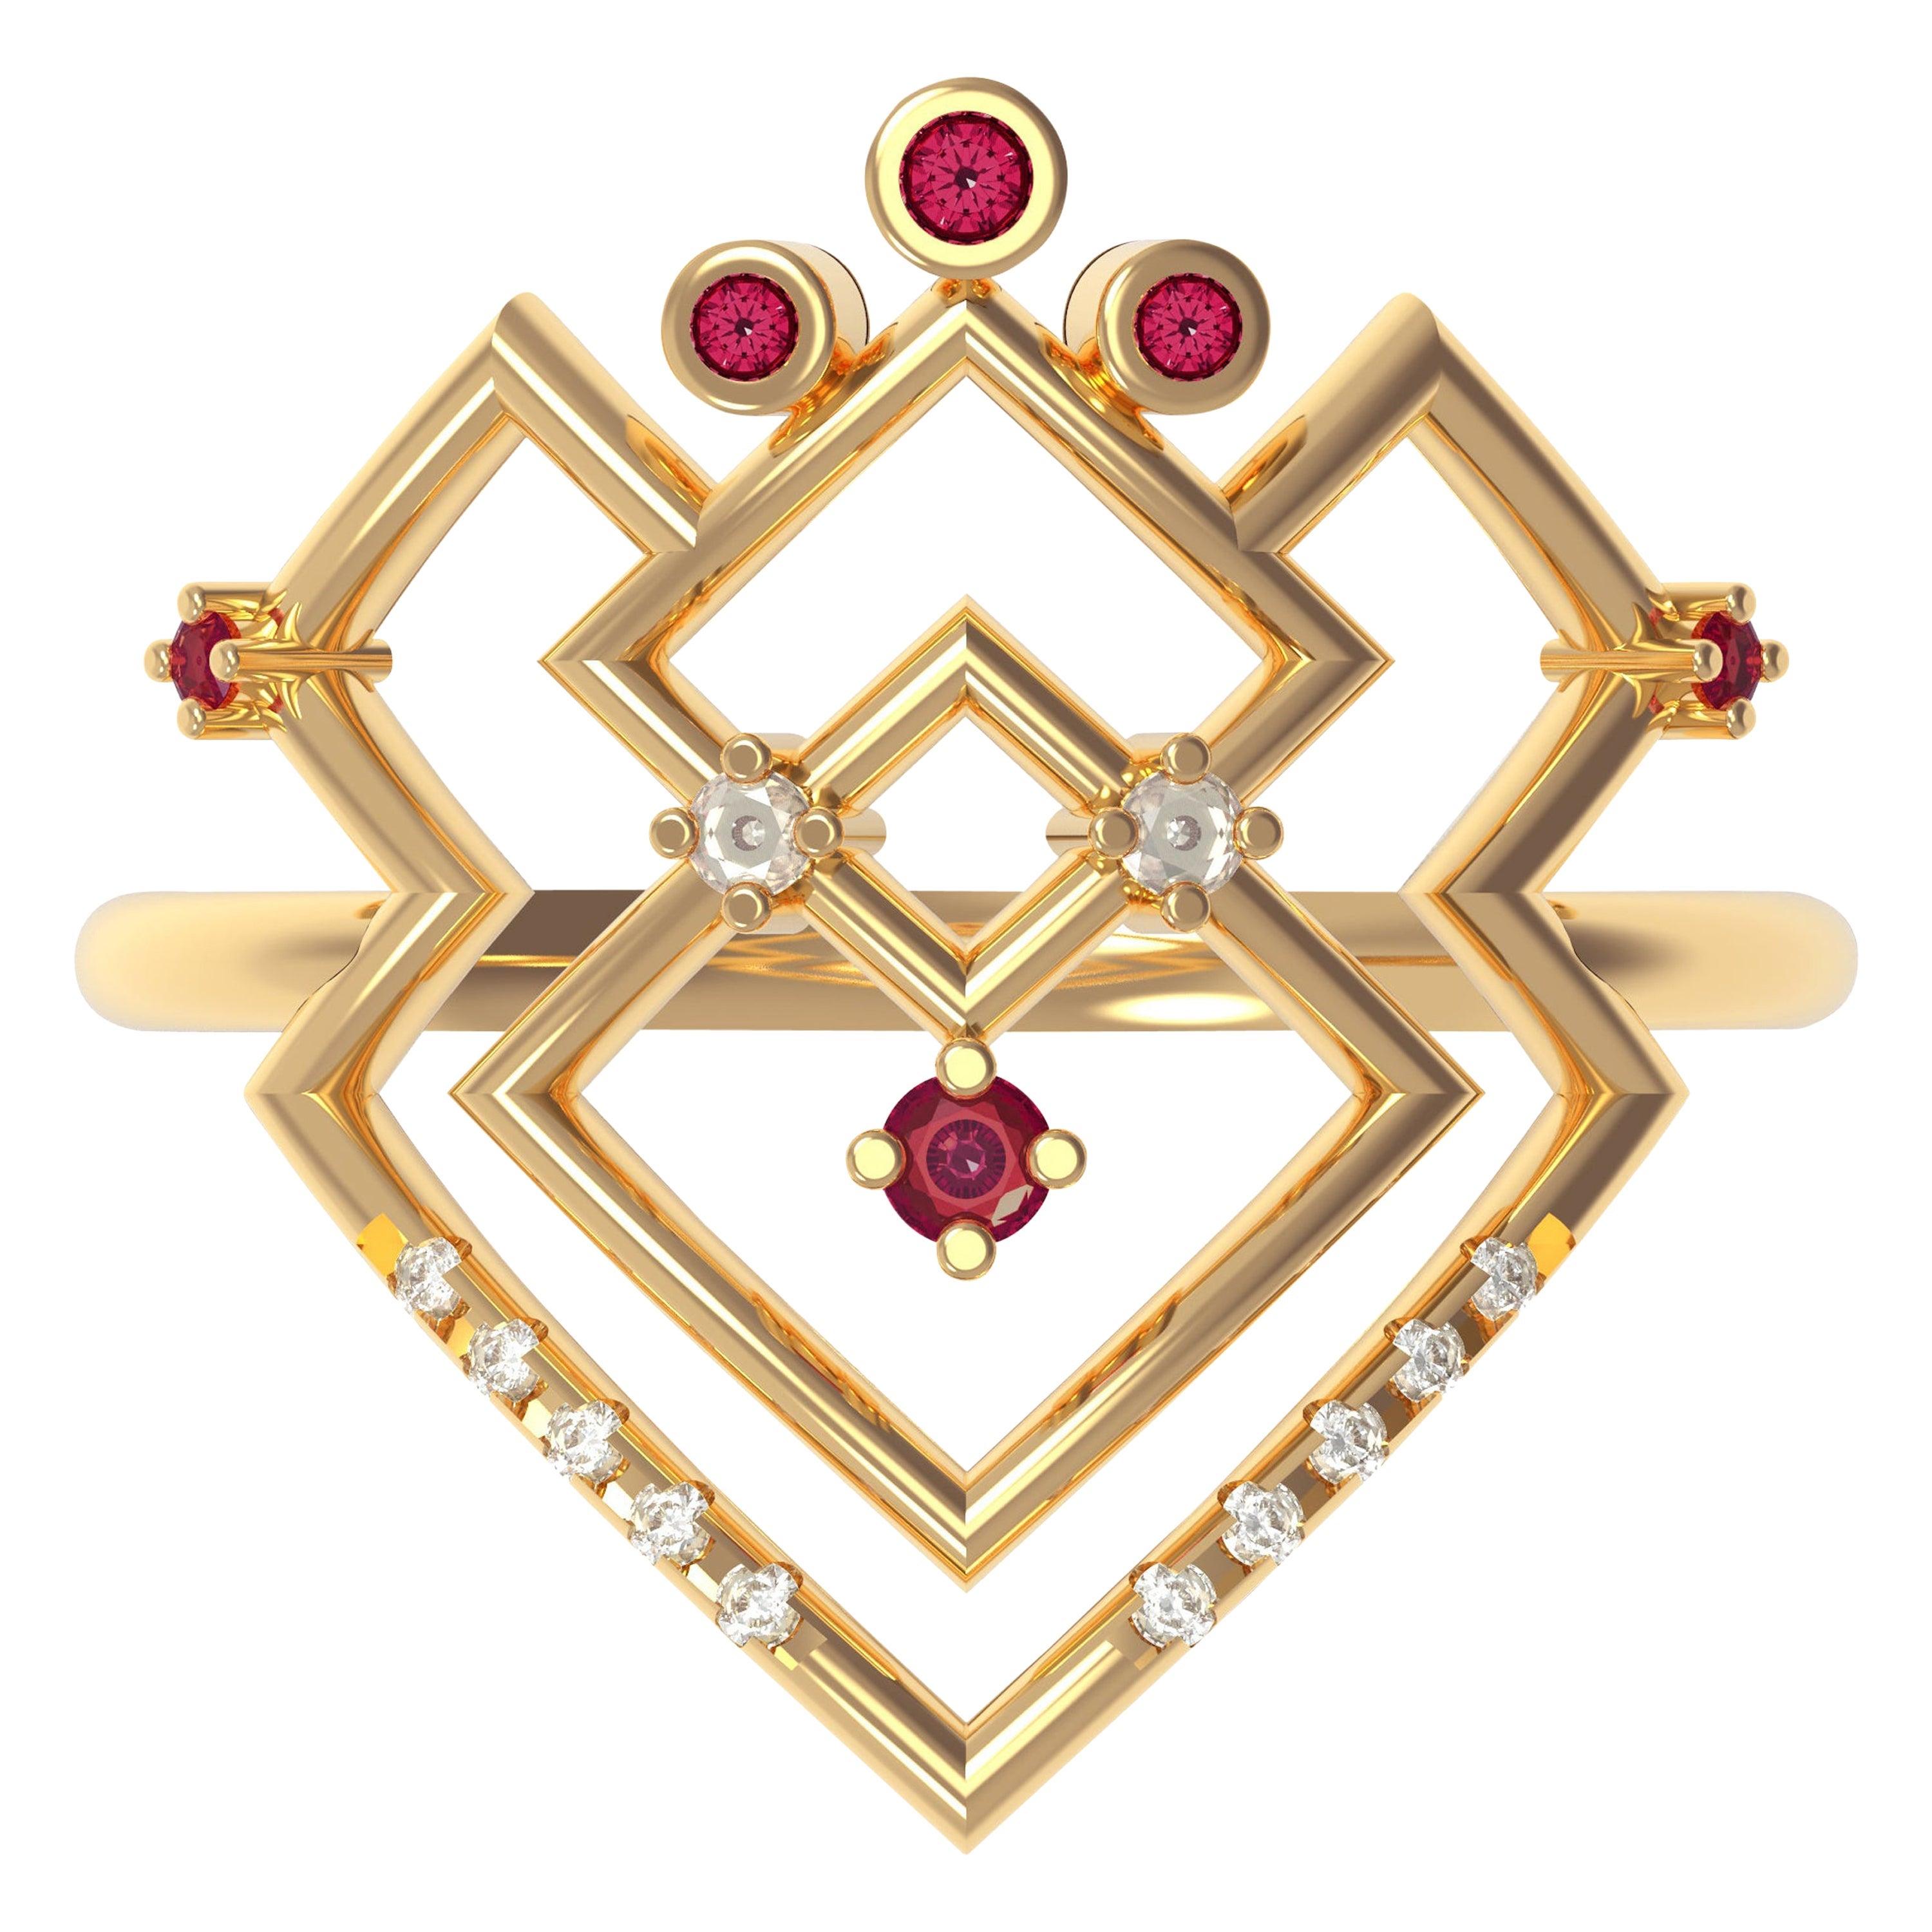 Interlocking Geometry Ruby and Diamond 18 Karat Gold Ring